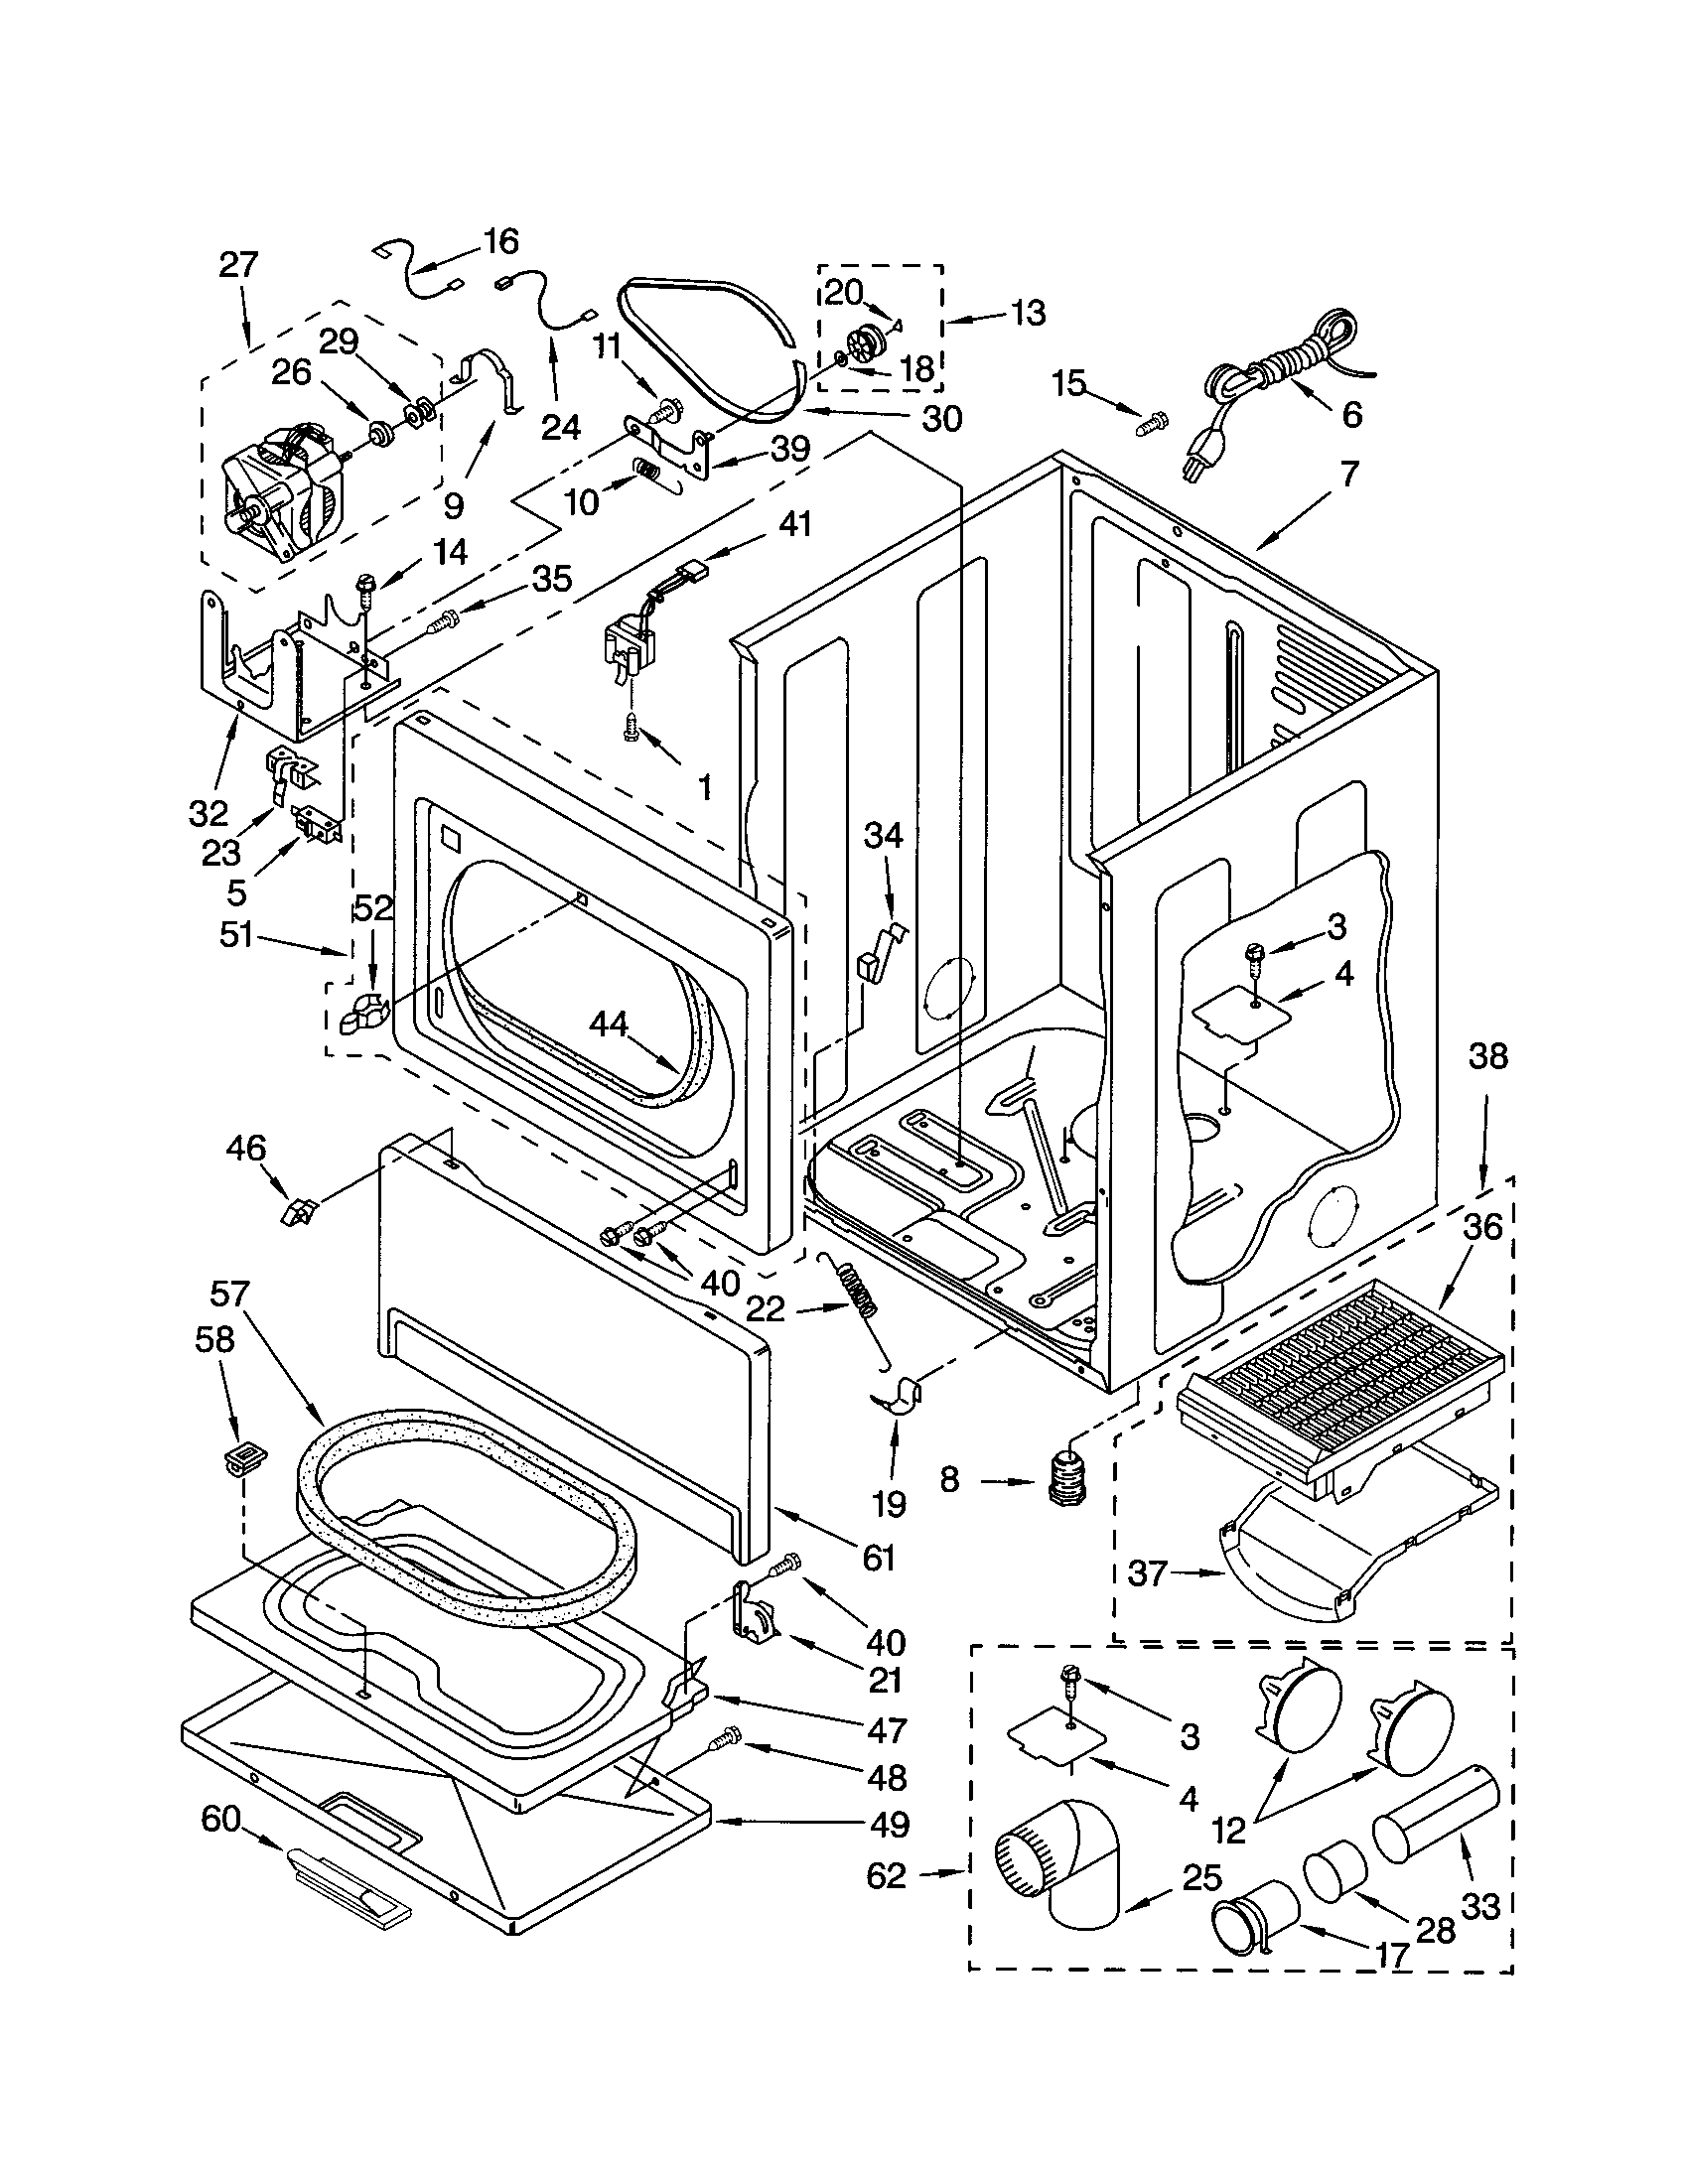 32 Kenmore Elite Dryer Wiring Diagram Wiring Diagram